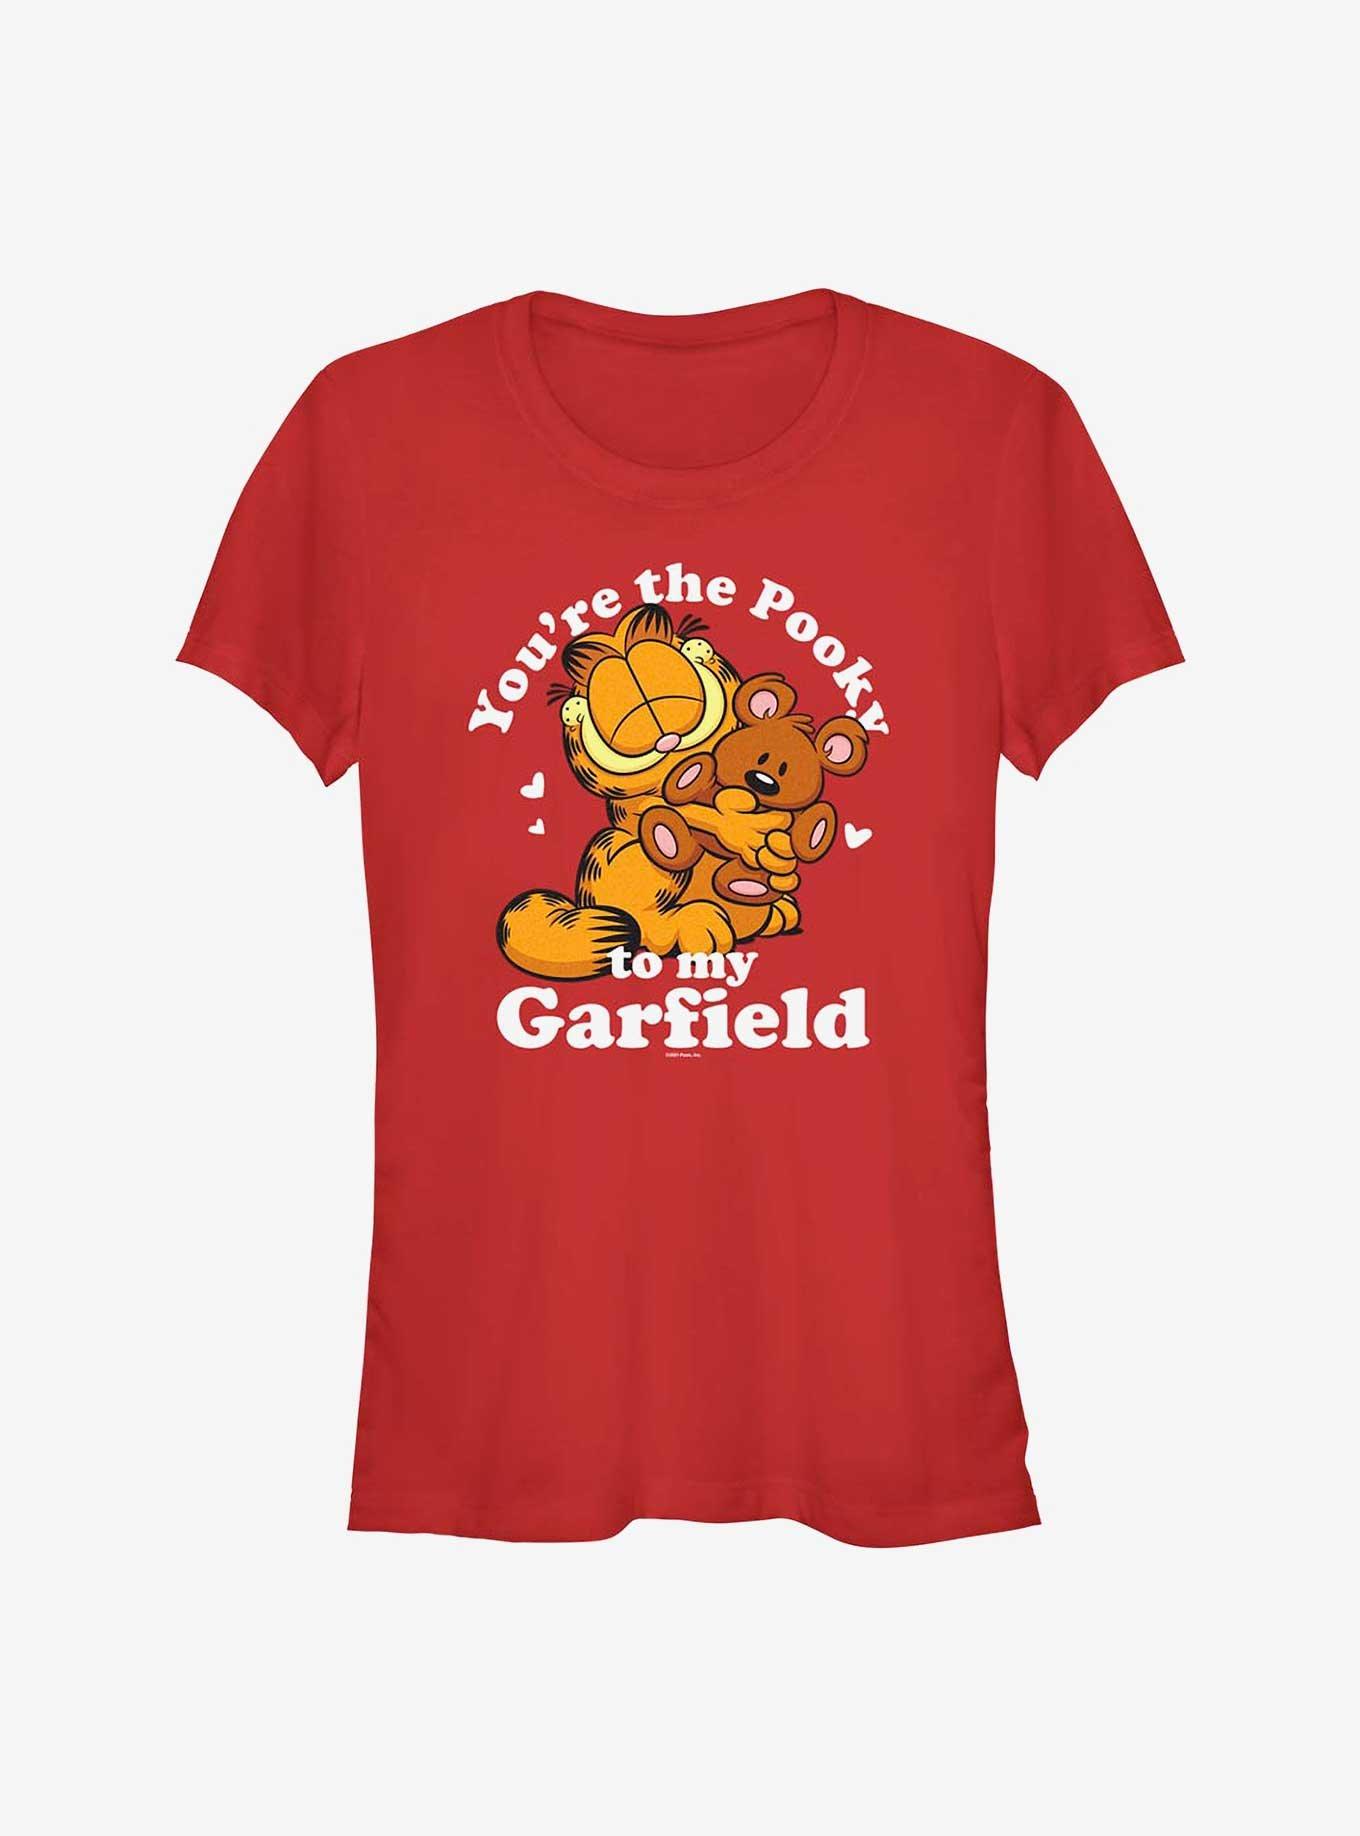 Garfield You're My Pooky Girls T-Shirt, , hi-res